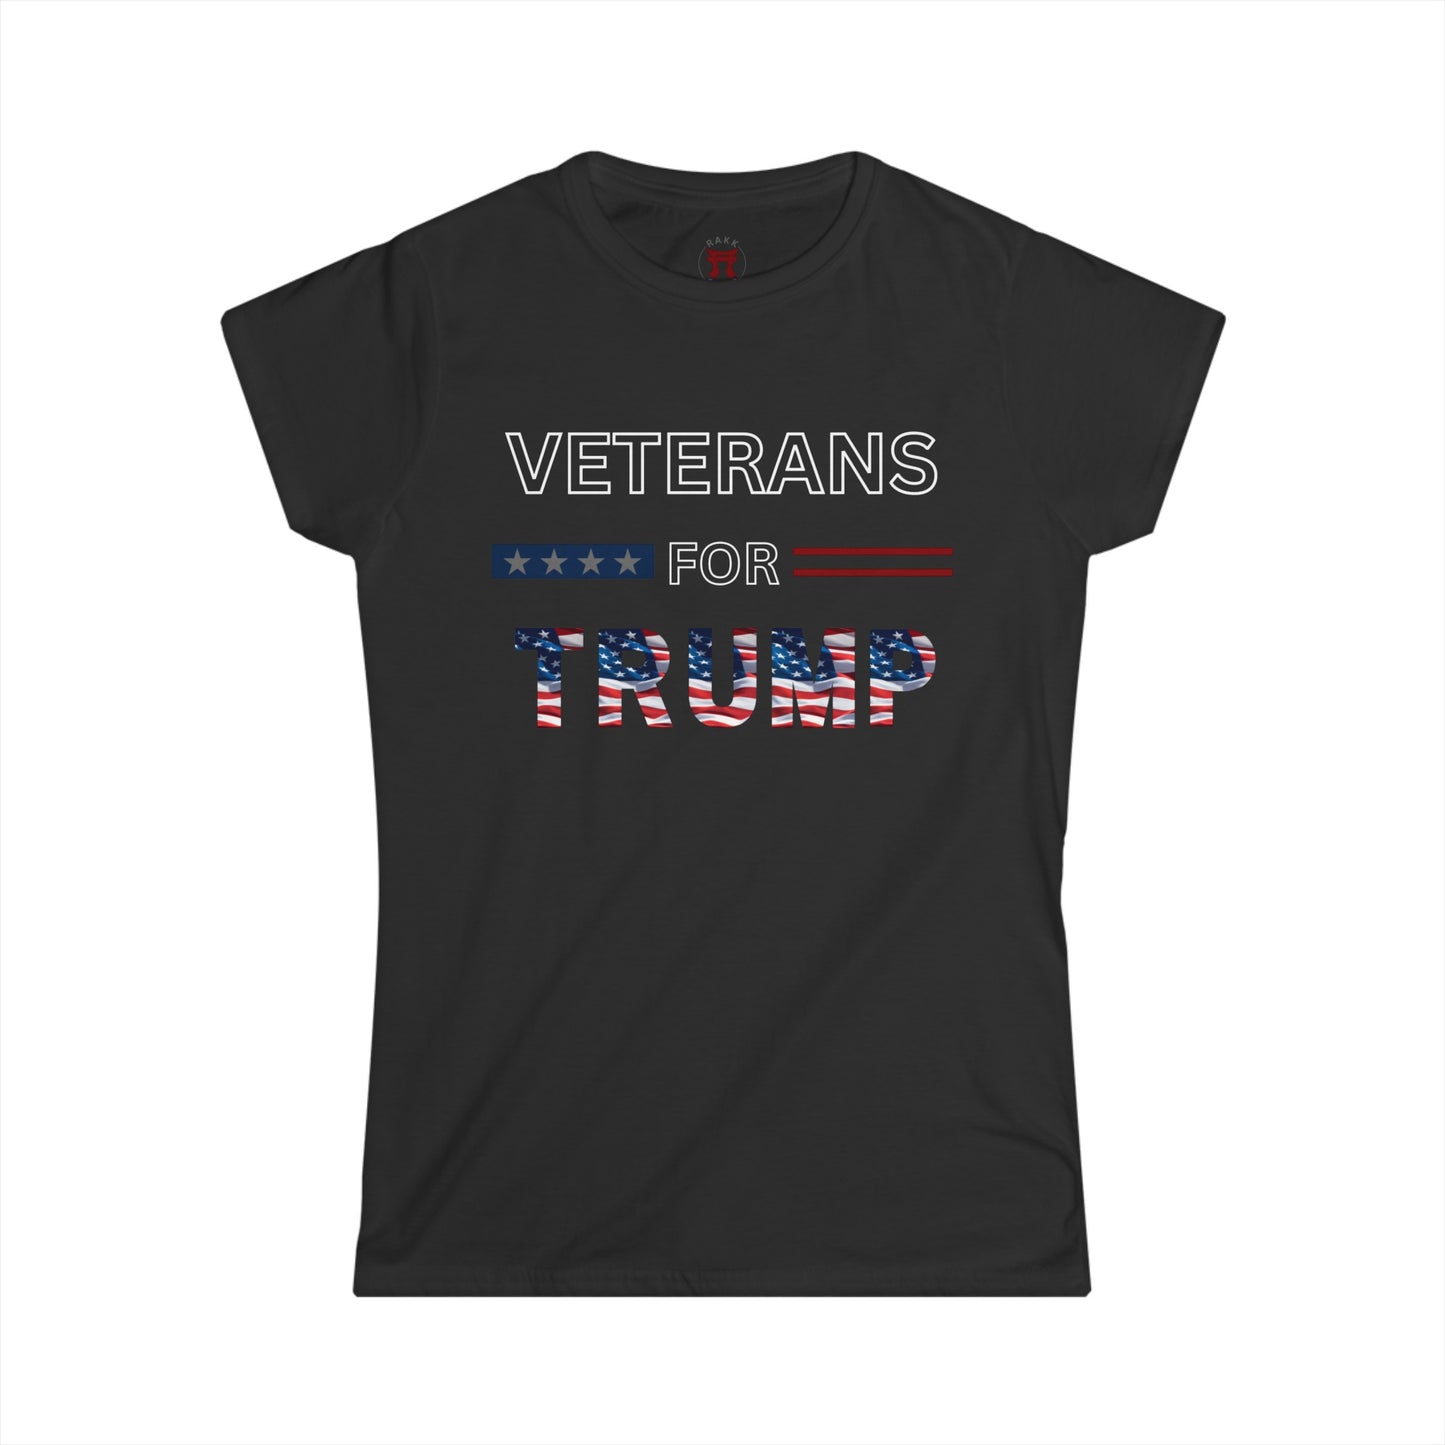 Rakkgear Women's Veterans For Trump Short Sleeve Tee in Black